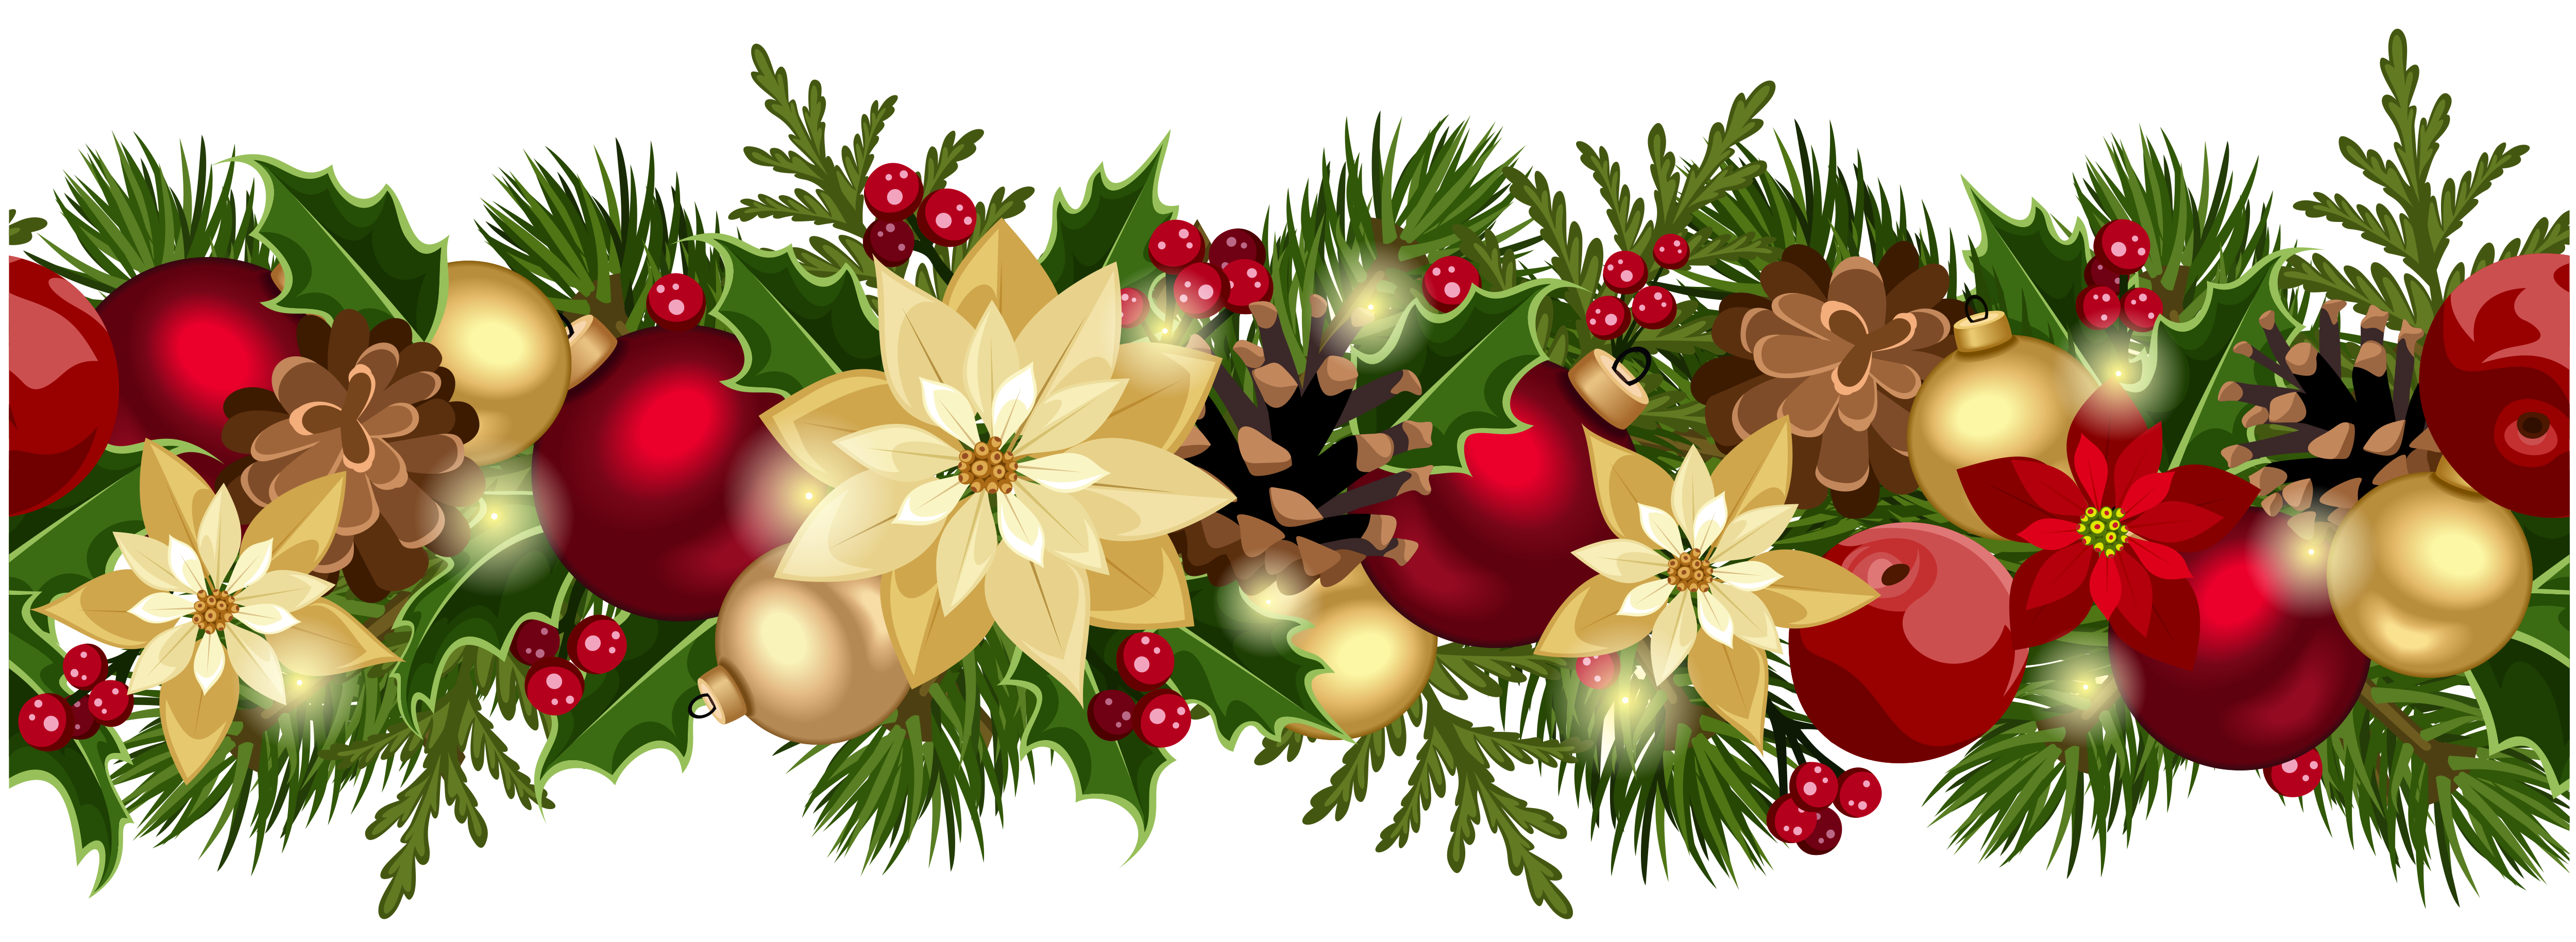 Christmas Wreath Transparent PNG Image